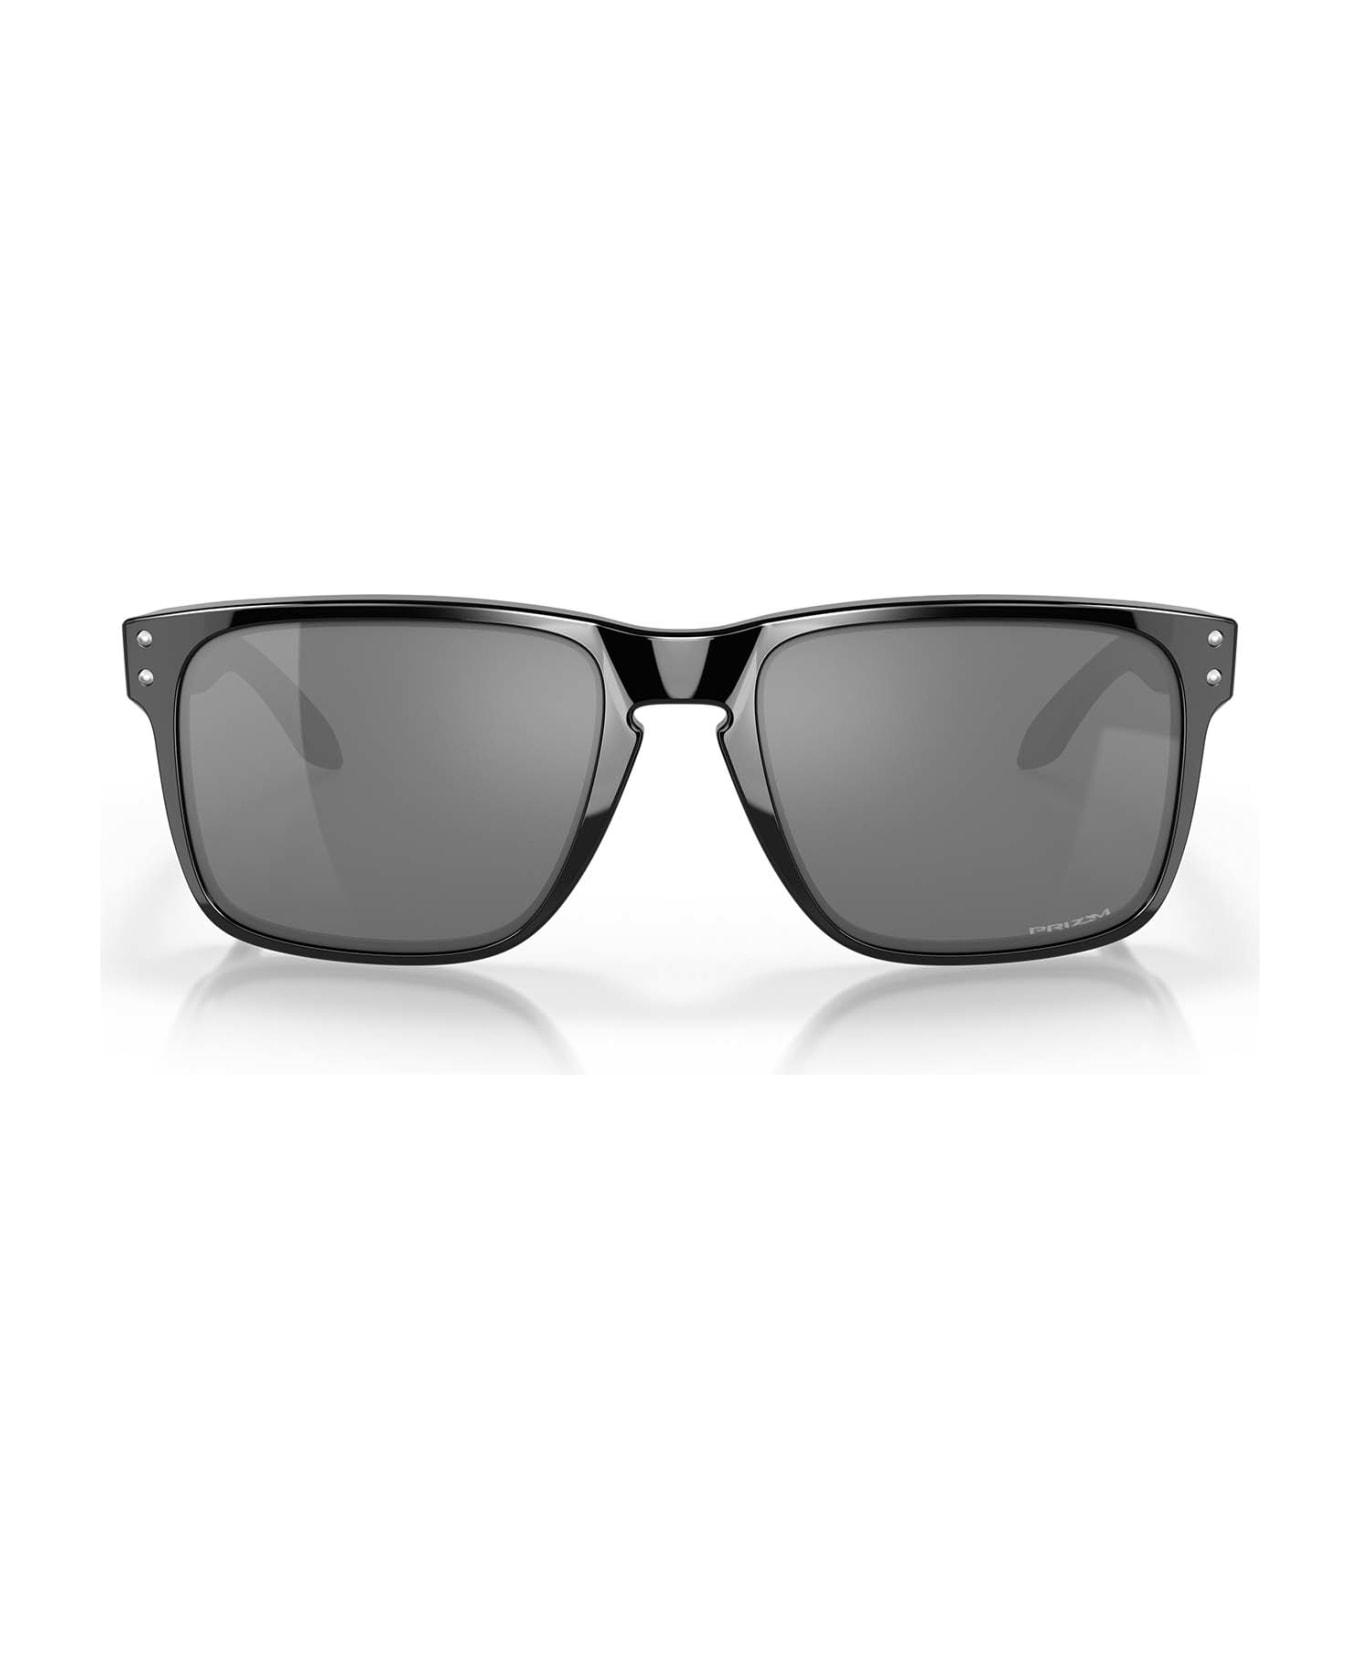 Oakley Oo9417 Polished Black Sunglasses - Polished Black